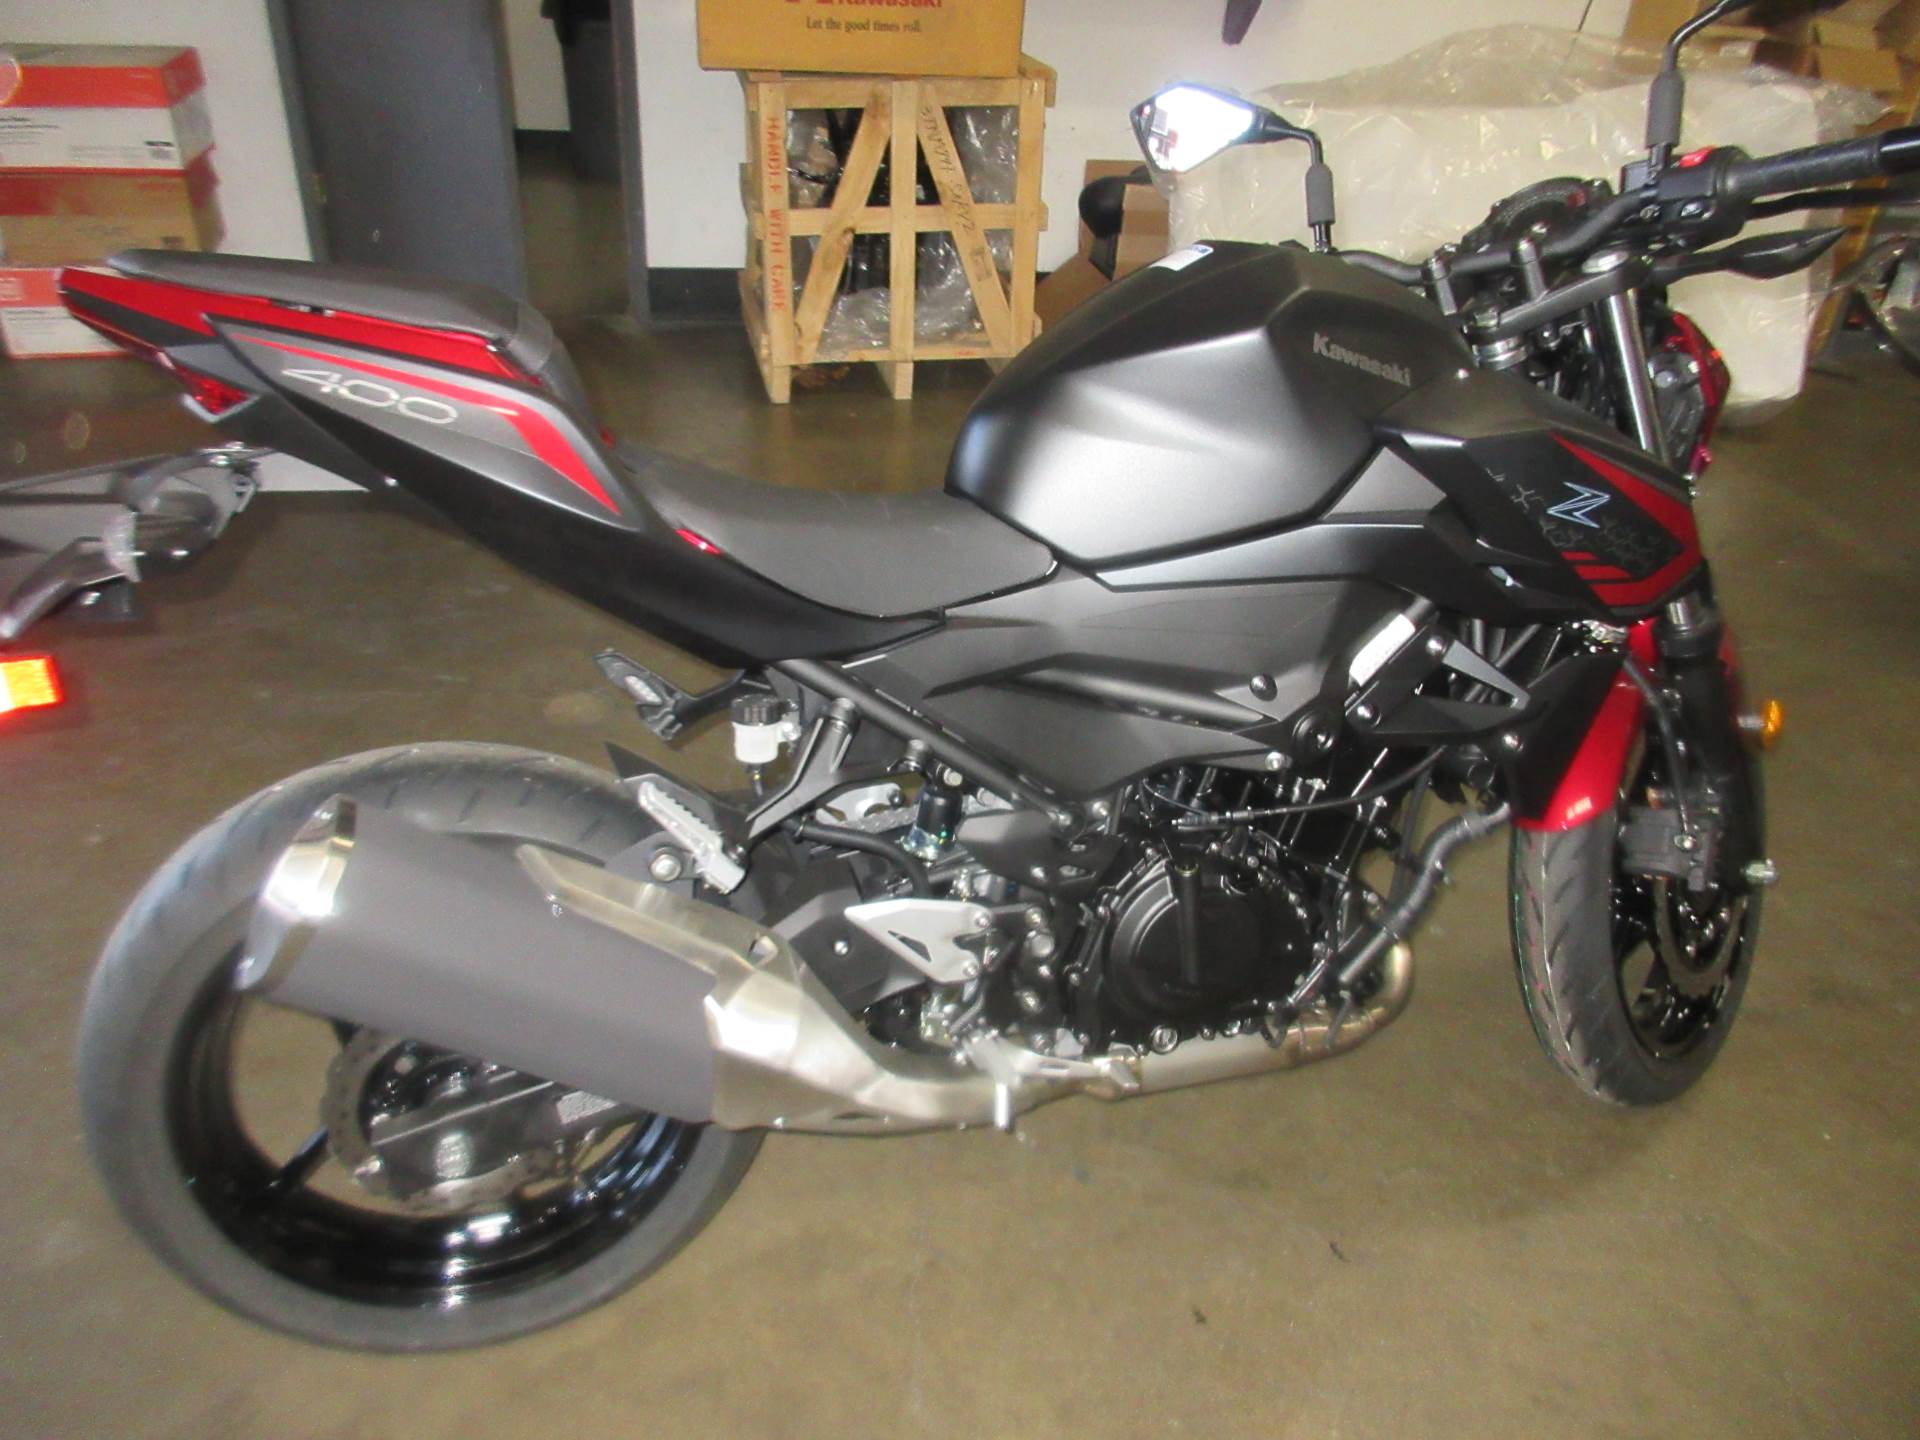 Masaccio fritaget transmission New 2021 Kawasaki Z400 ABS Motorcycles in Sacramento, CA | Stock Number:  AB5789